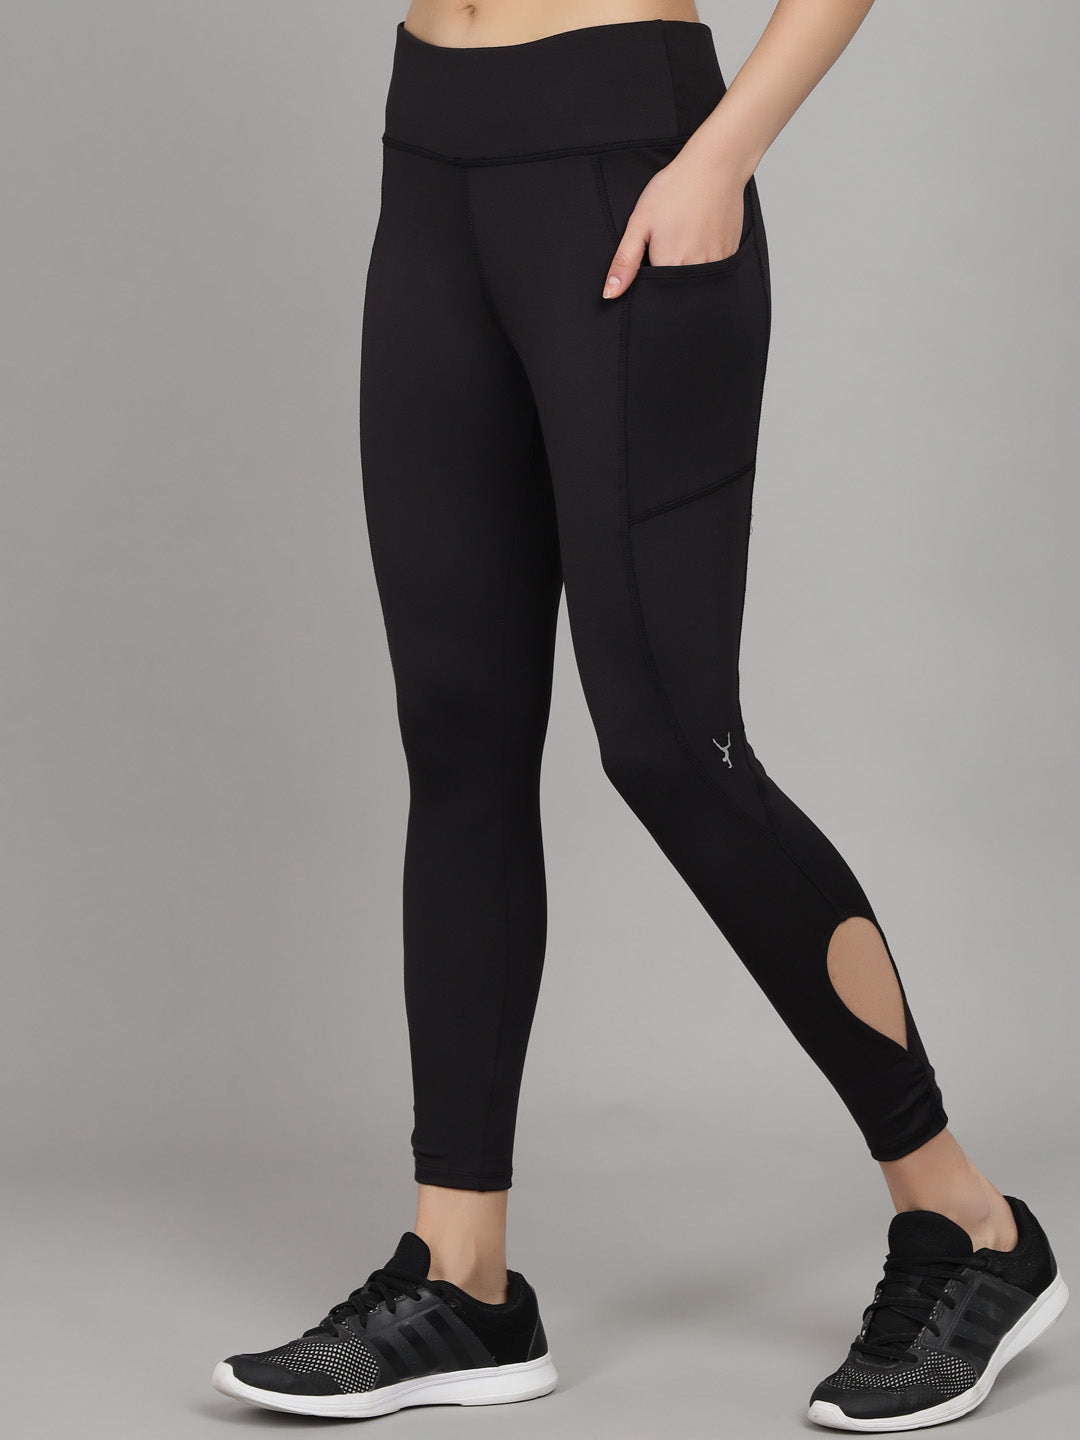 Black Print High Waist Gym Wear/Yoga Wear Ankle Length Leggings